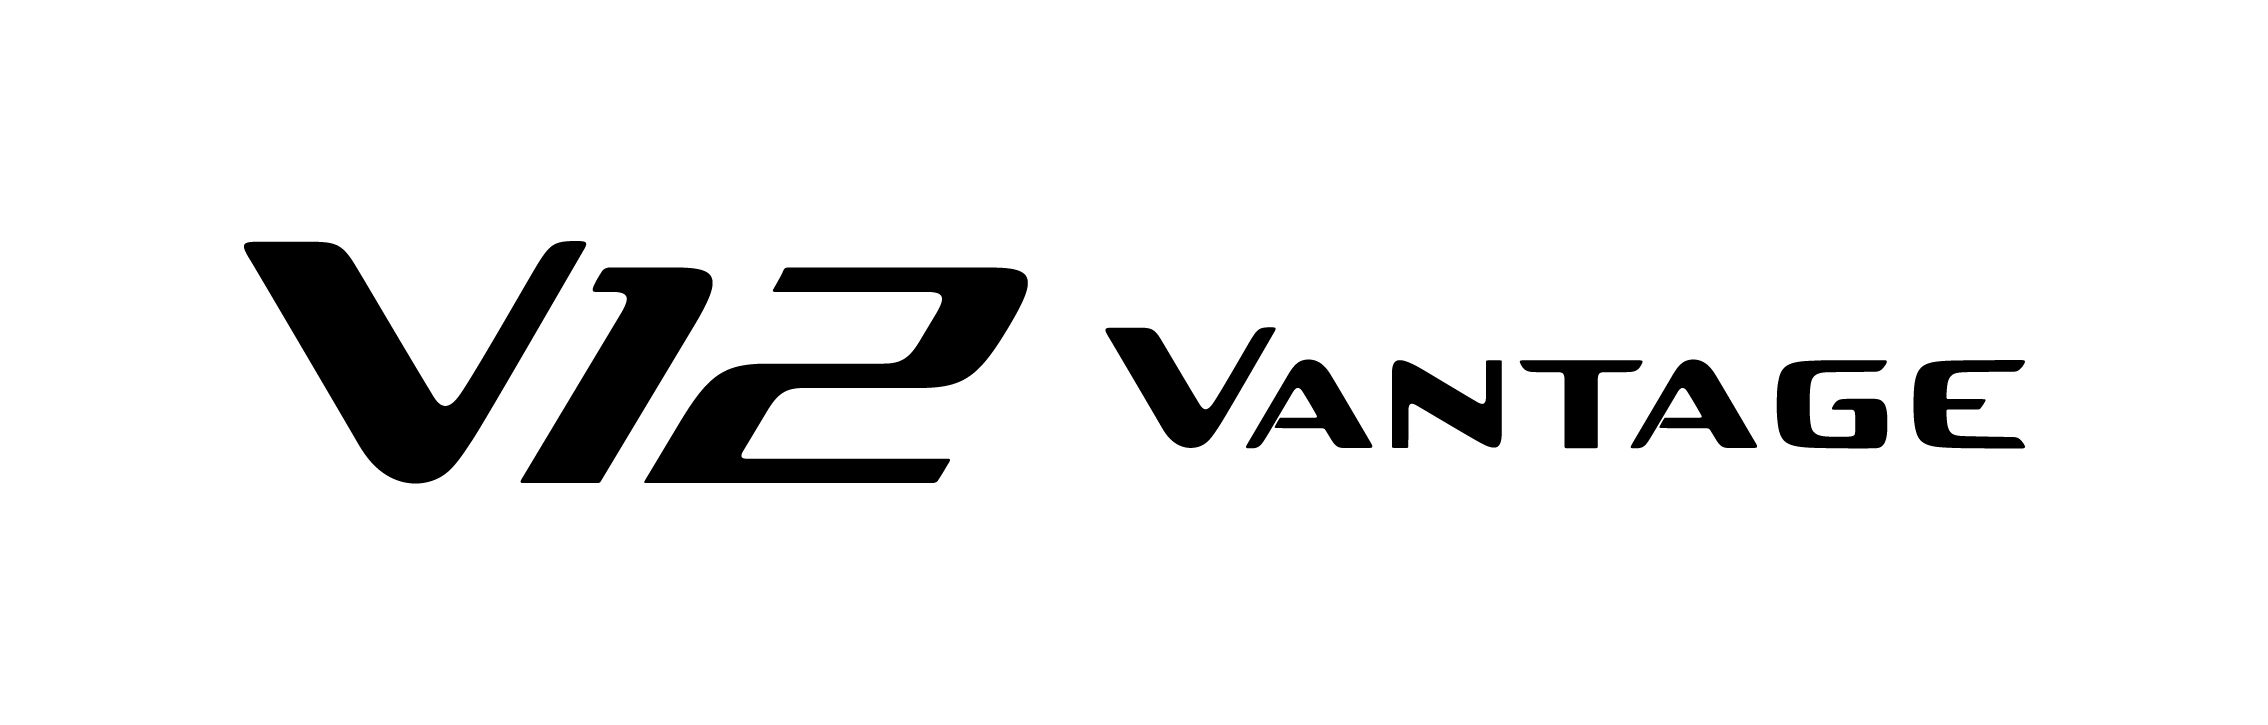 Aston Martin V12 Vantage logo